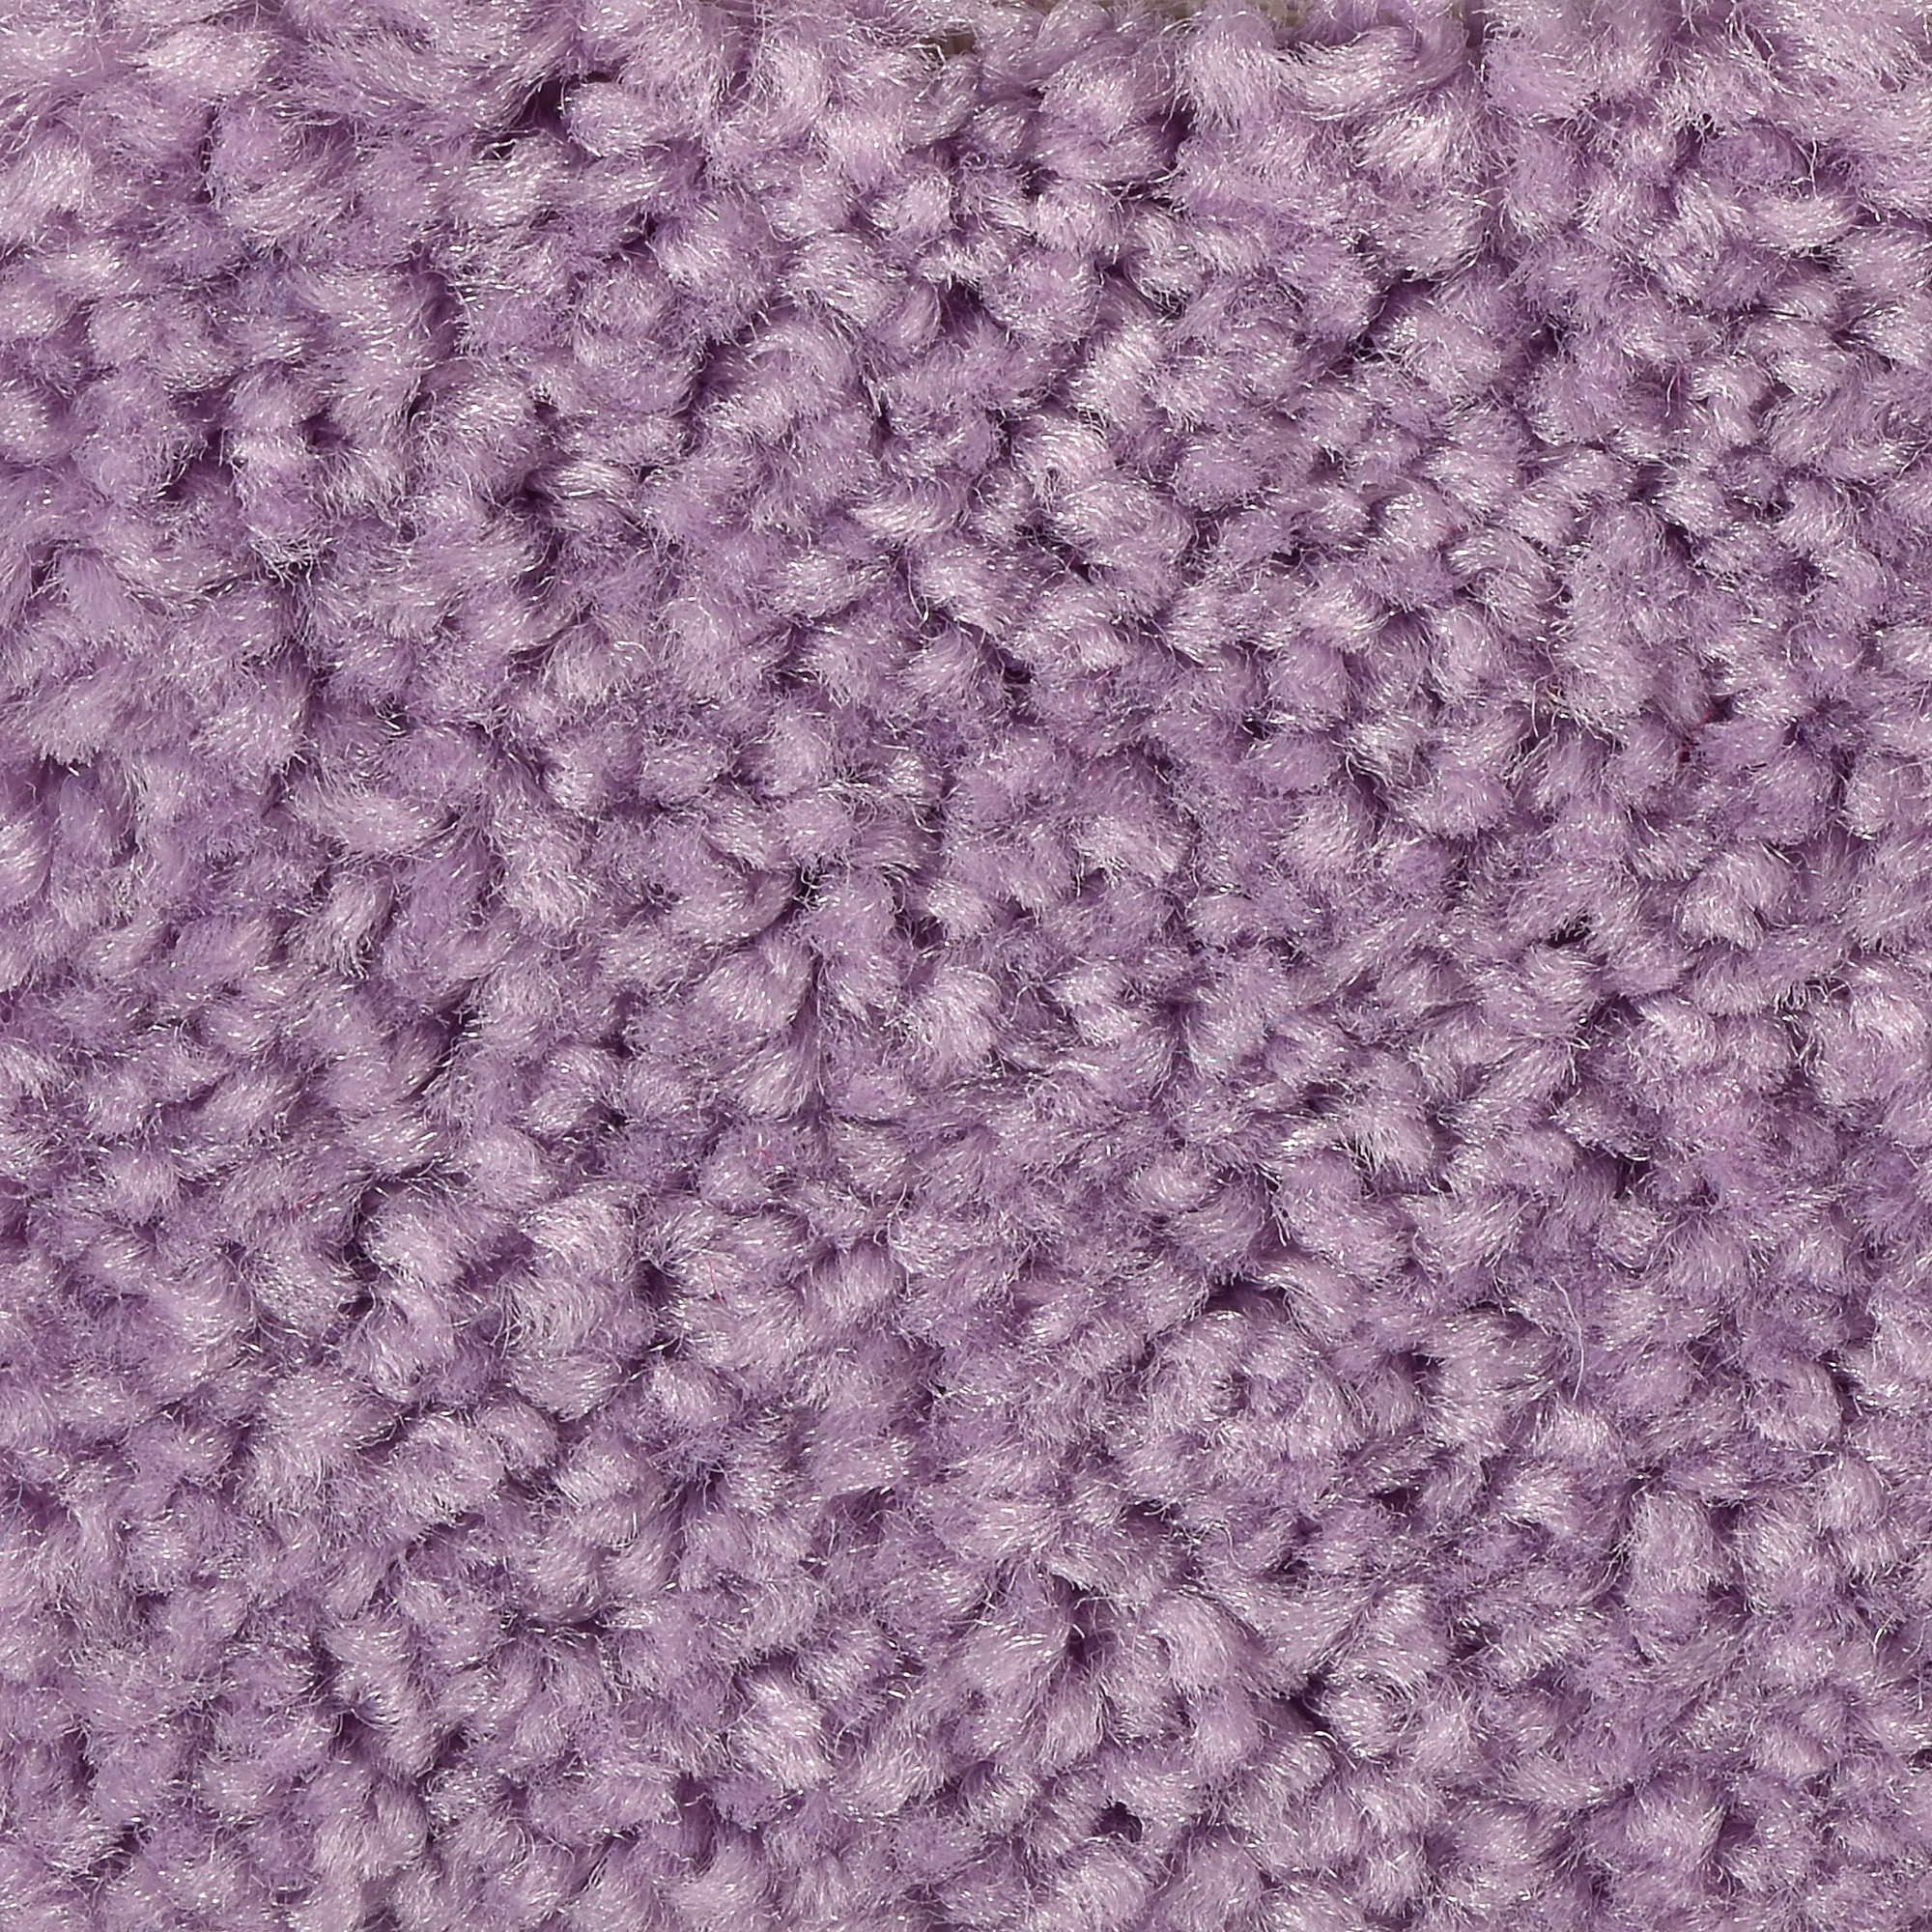 Teppichboden Velours Bari rosa FB63 400 cm breit (Meterware)